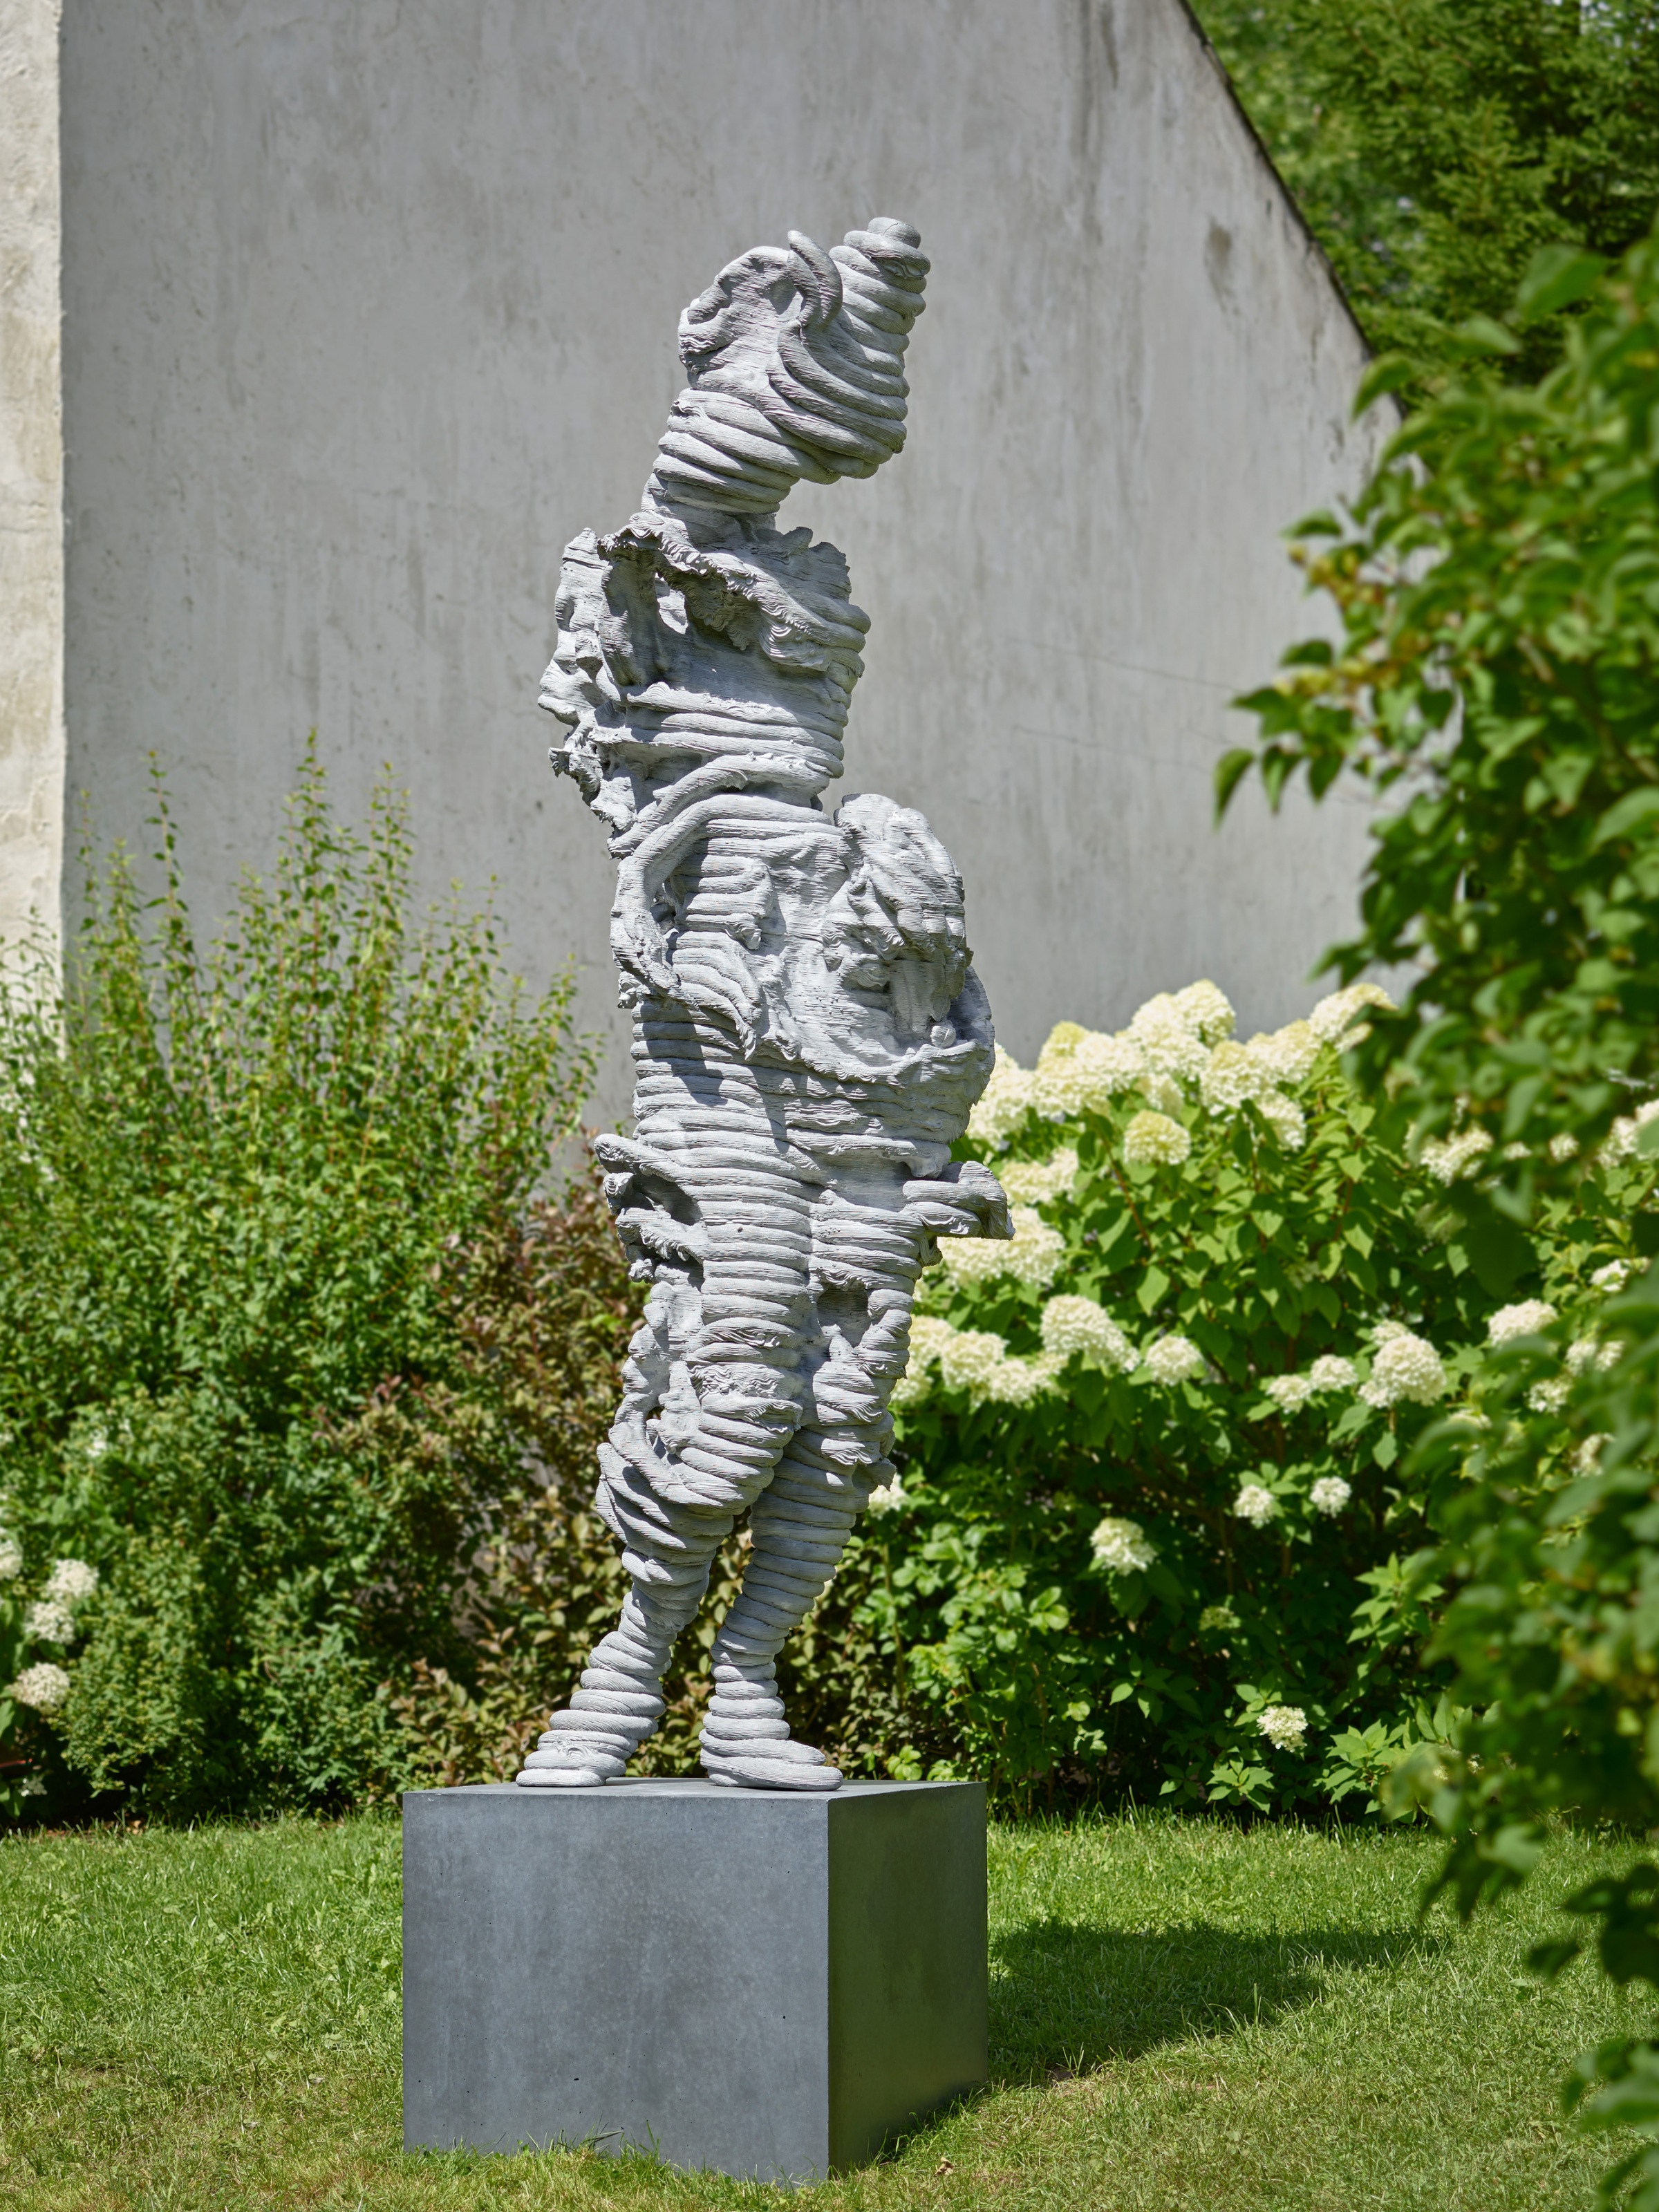 Toby Ziegler, Slave, 2017, cast aluminium, sculpture: 255 x 90 x 60 cm.; 100 3/8 x 35 3/8 x 23 5/8 in., plinth: 55.5 x 100 x 100 cm.; 21 7/8 x 39 3/8 x 39 3/8 in.